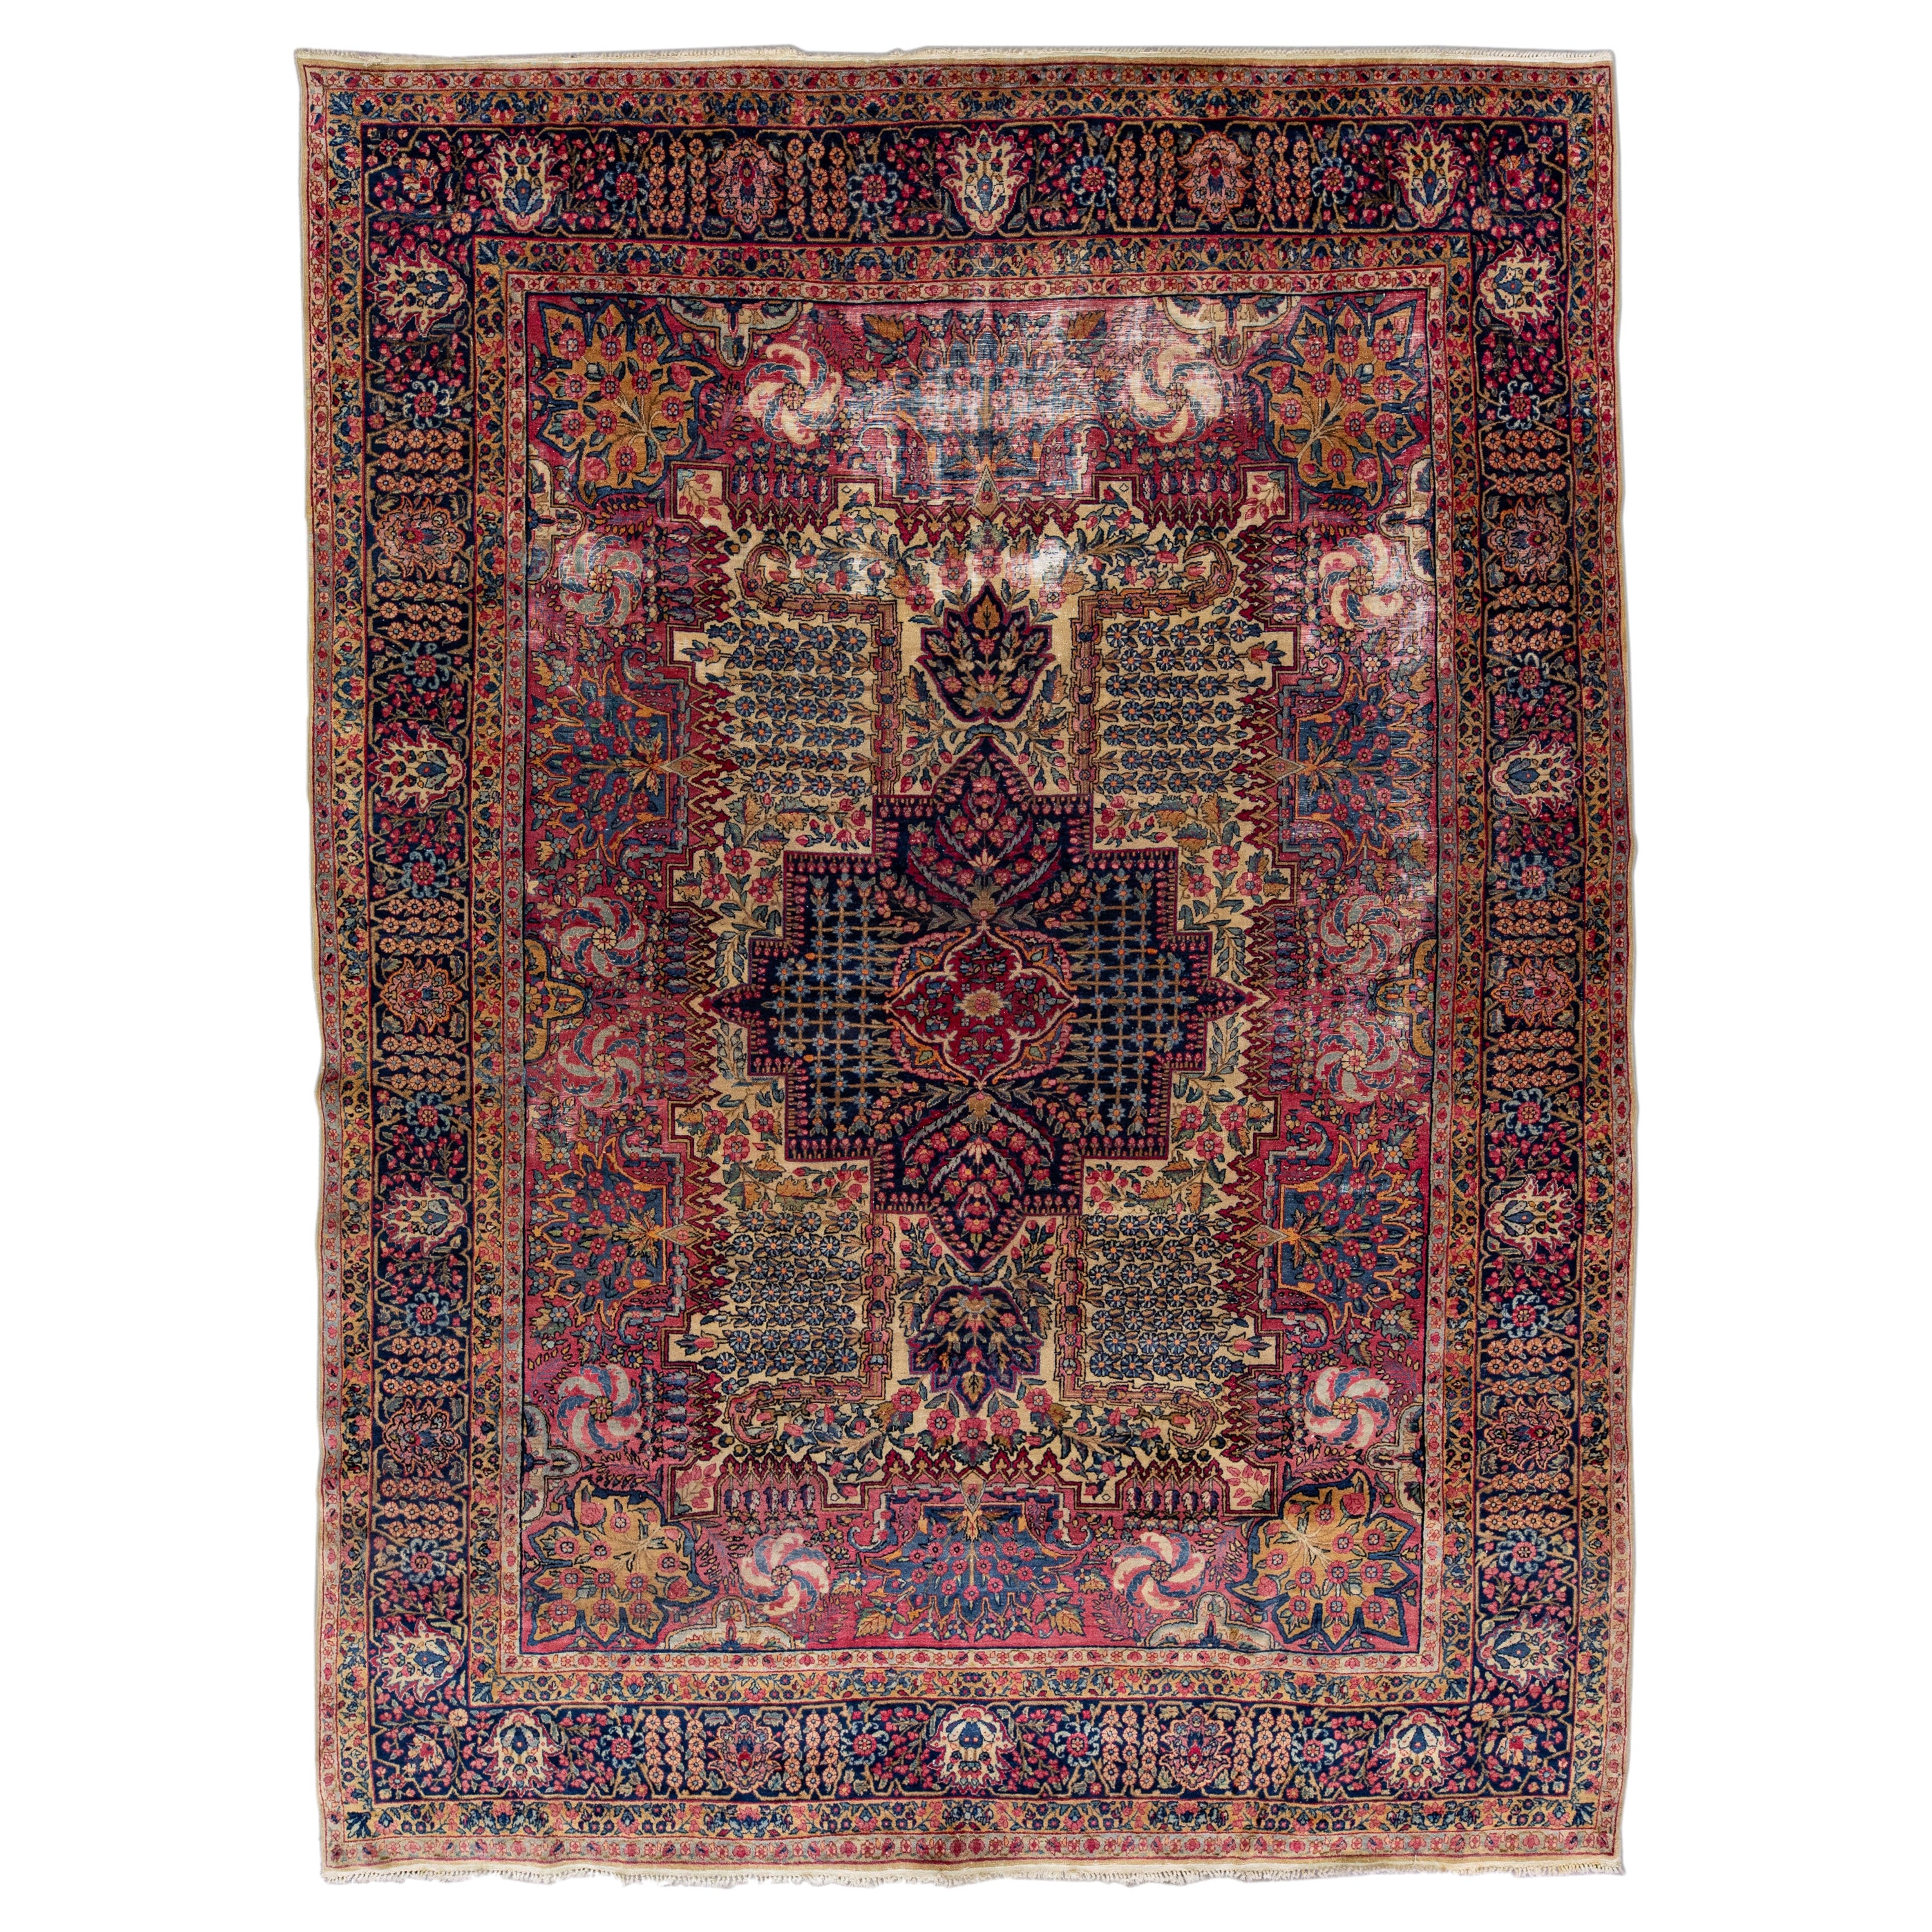 Multicolor Antique Persian Kerman Handmade Allover Designed Wool Rug For Sale